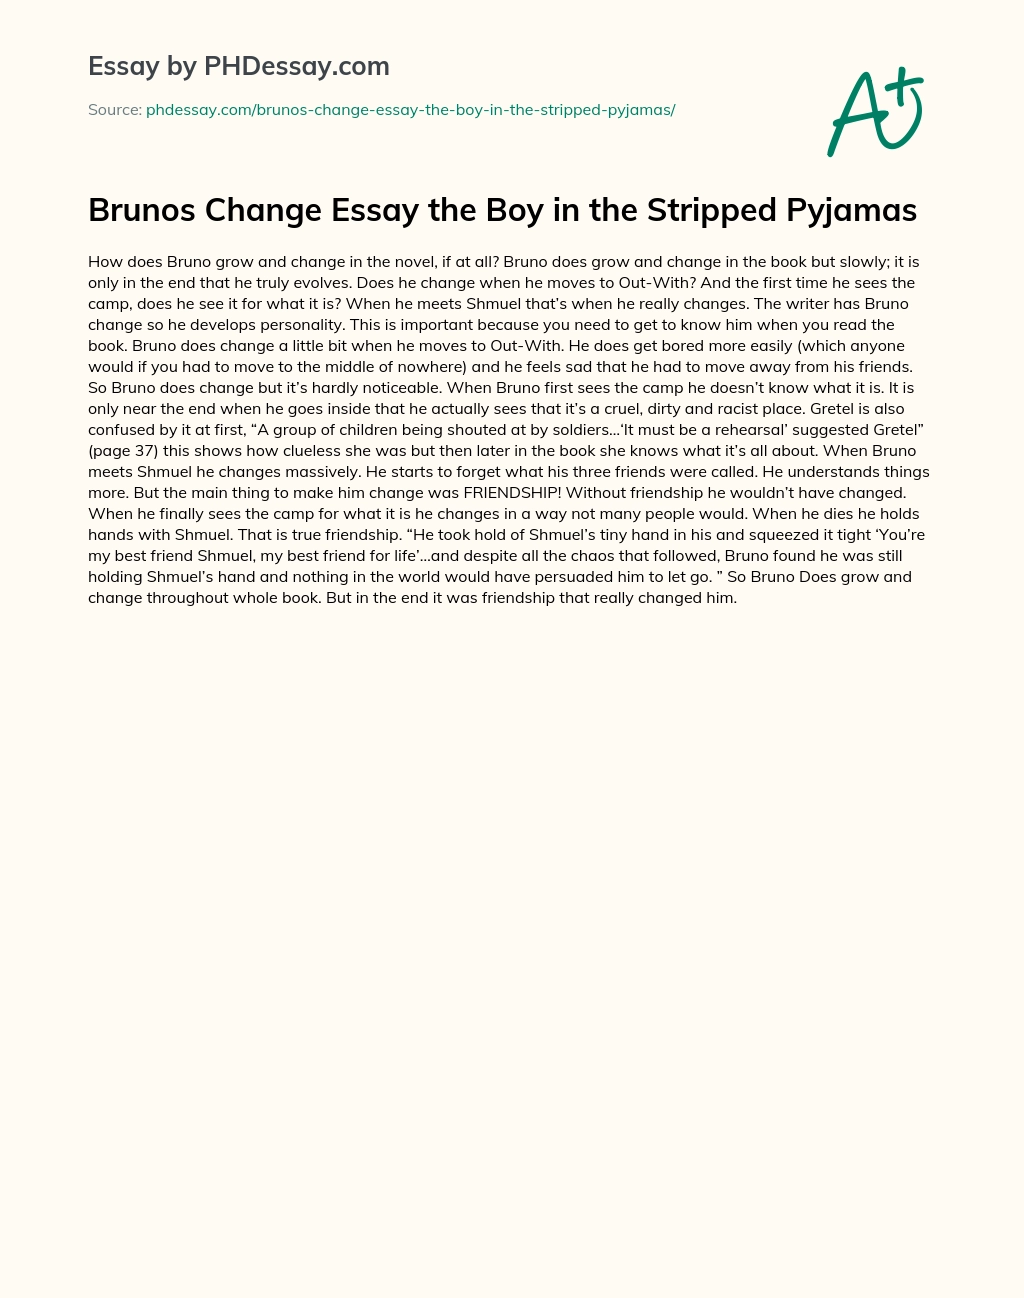 Brunos Change Essay the Boy in the Stripped Pyjamas essay